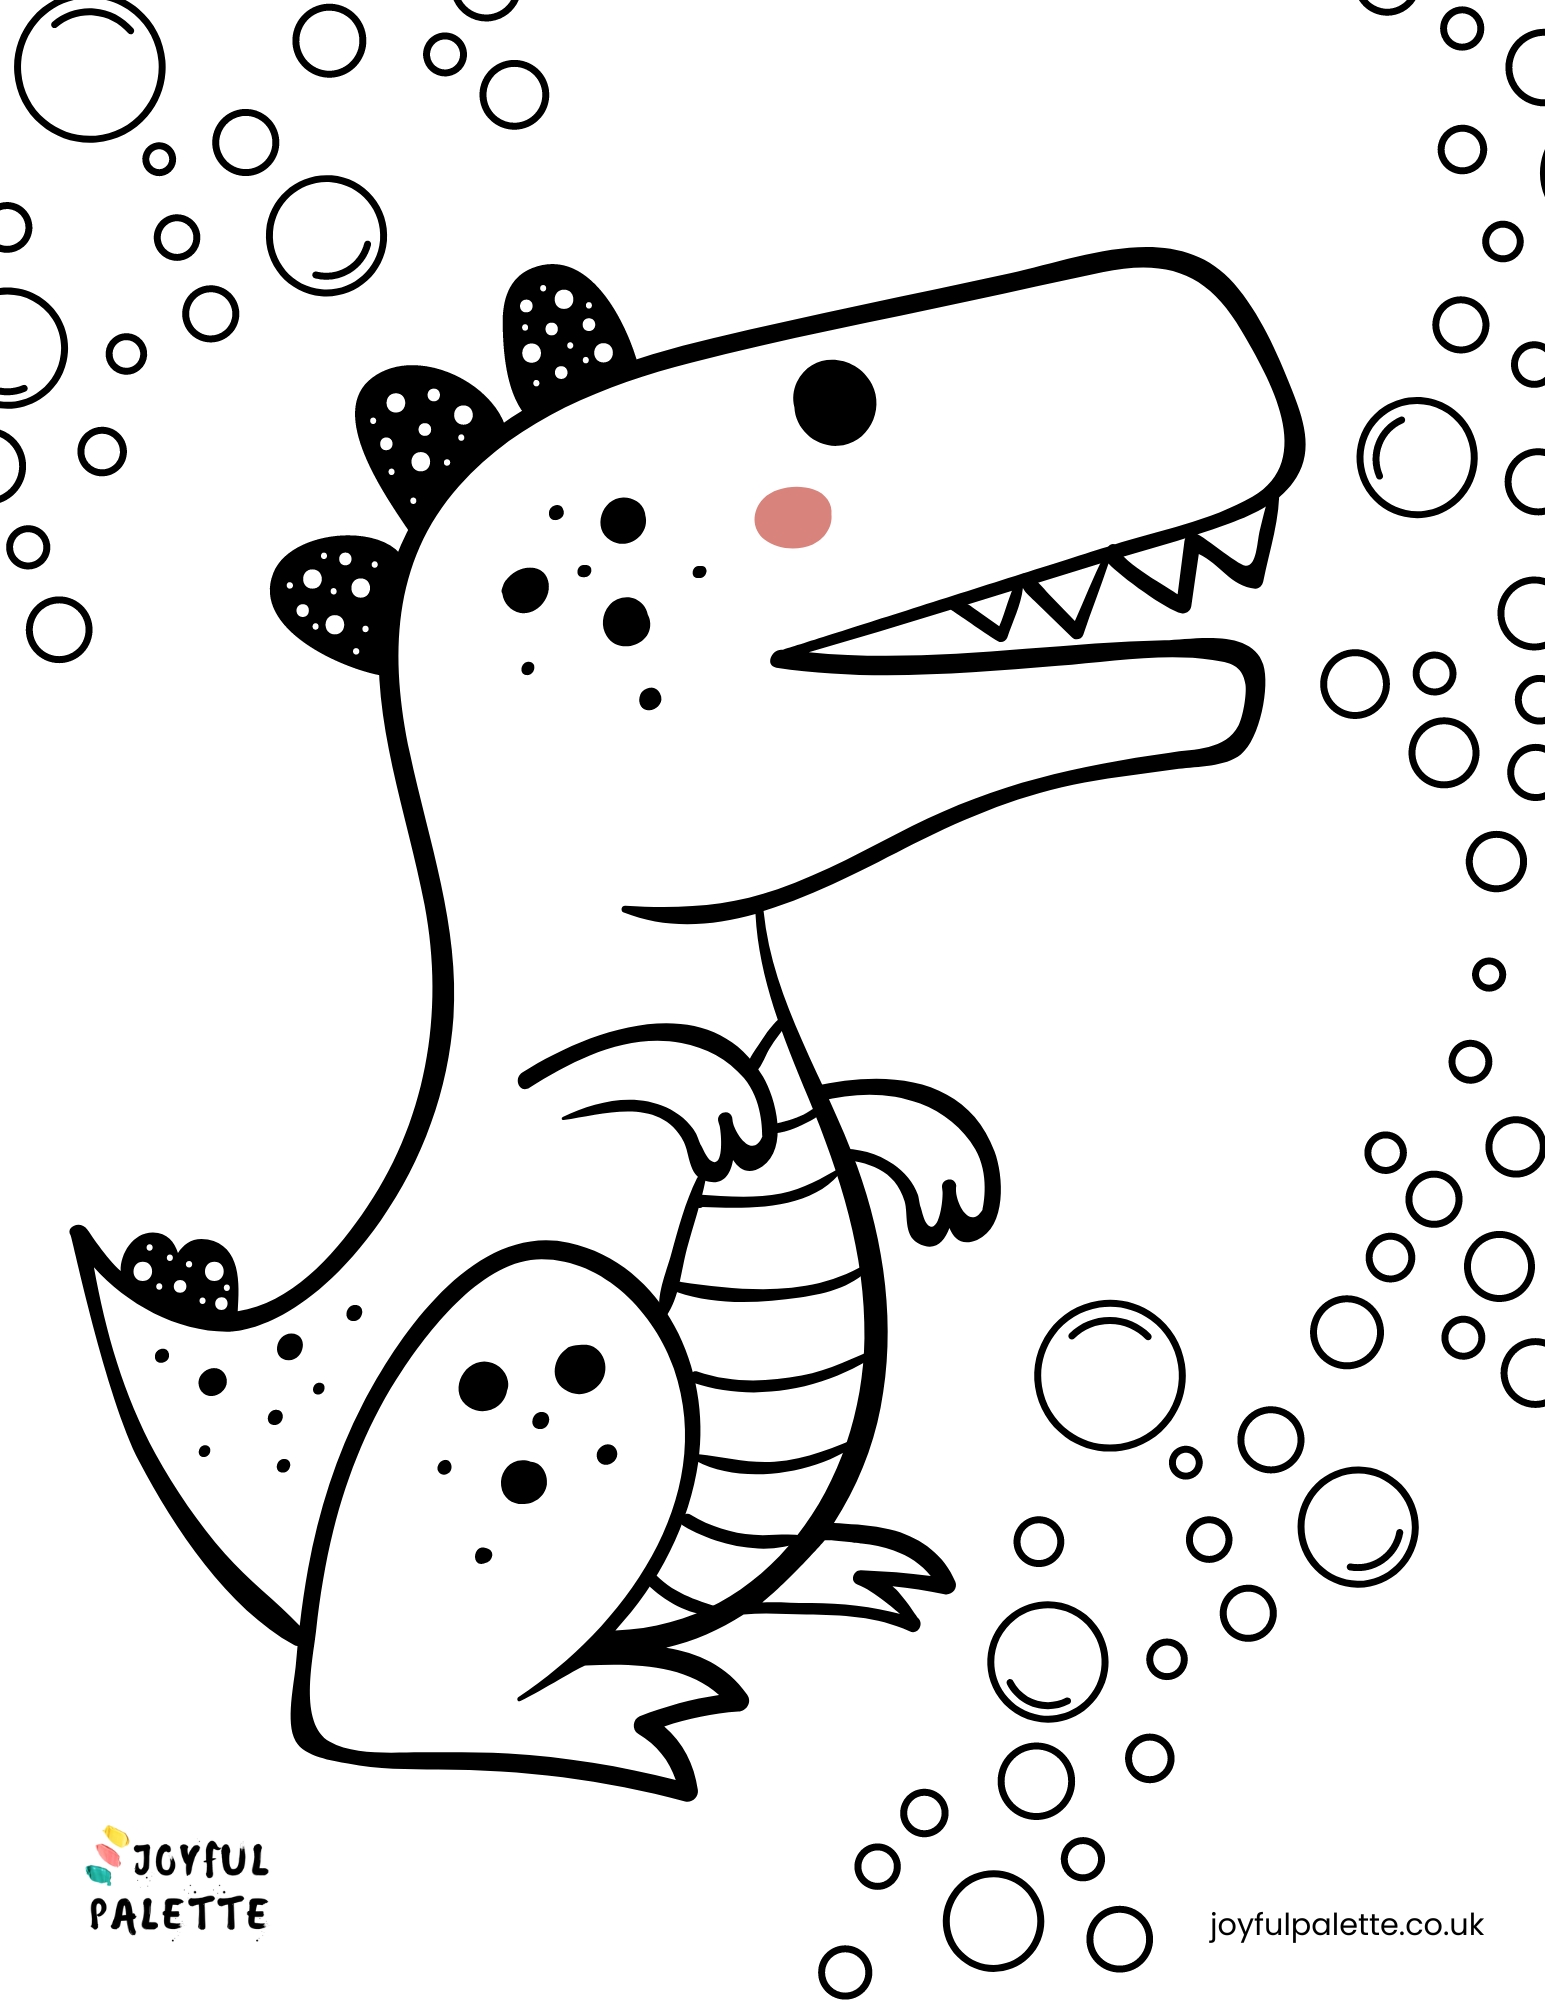 dinosaur coloring sheet